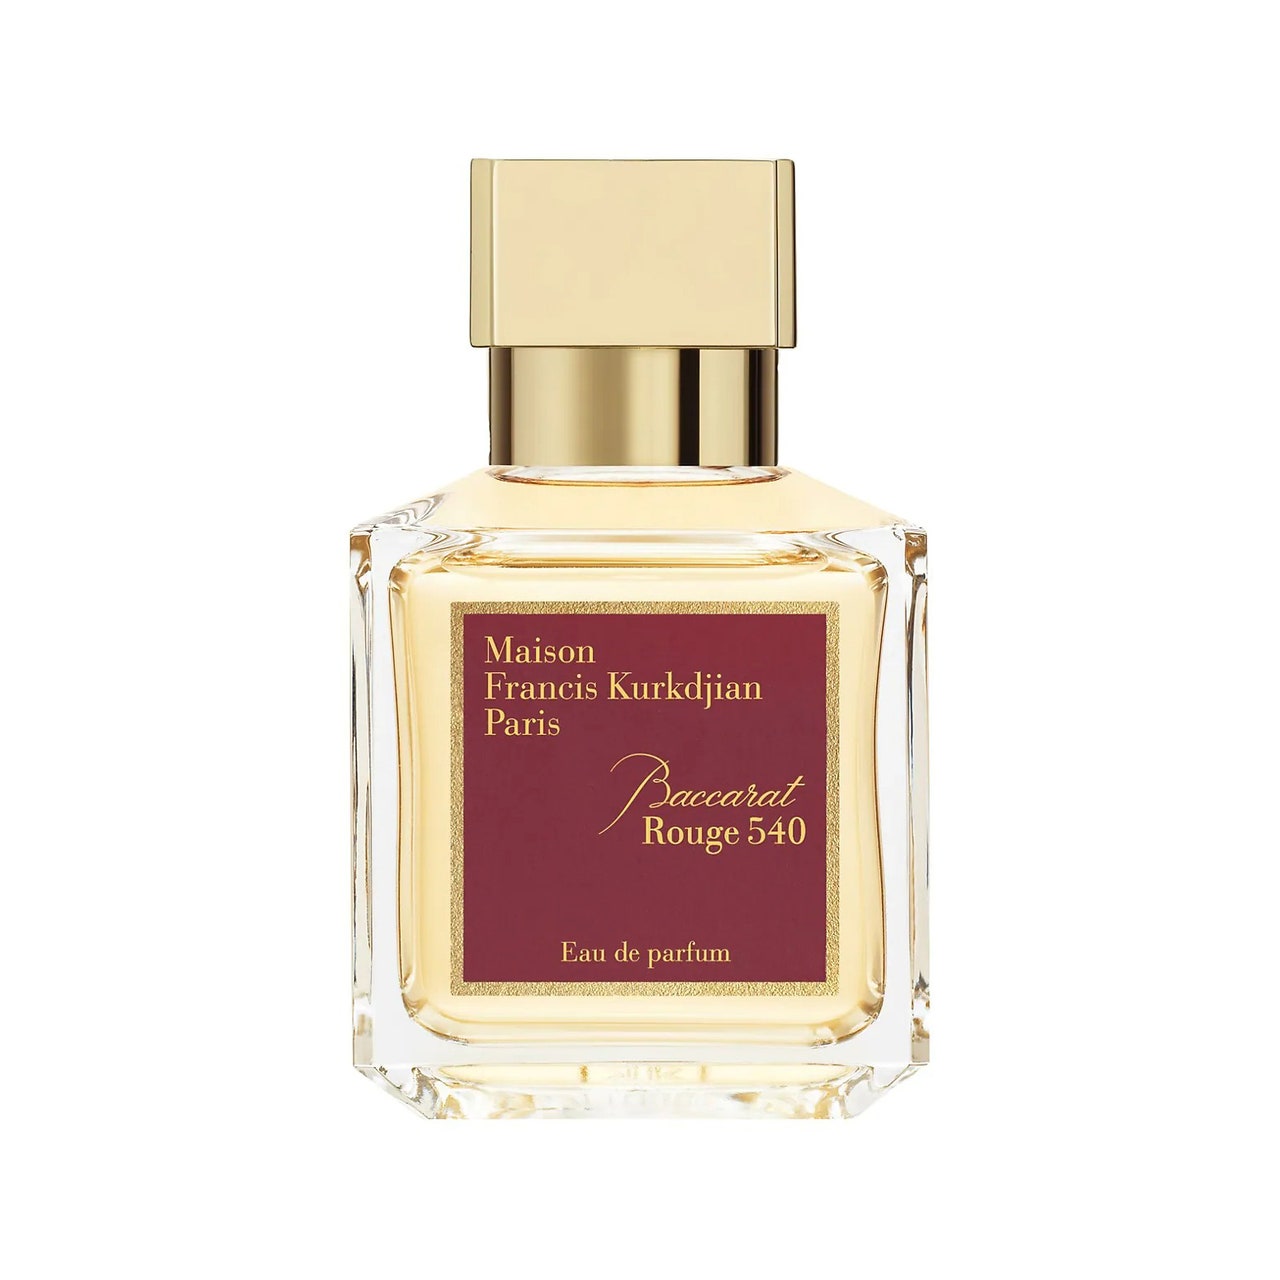 Maison Francis Kurkdjian Baccarat Rouge 540 Eau de Parfum Goldparfüm auf weißem Hintergrund